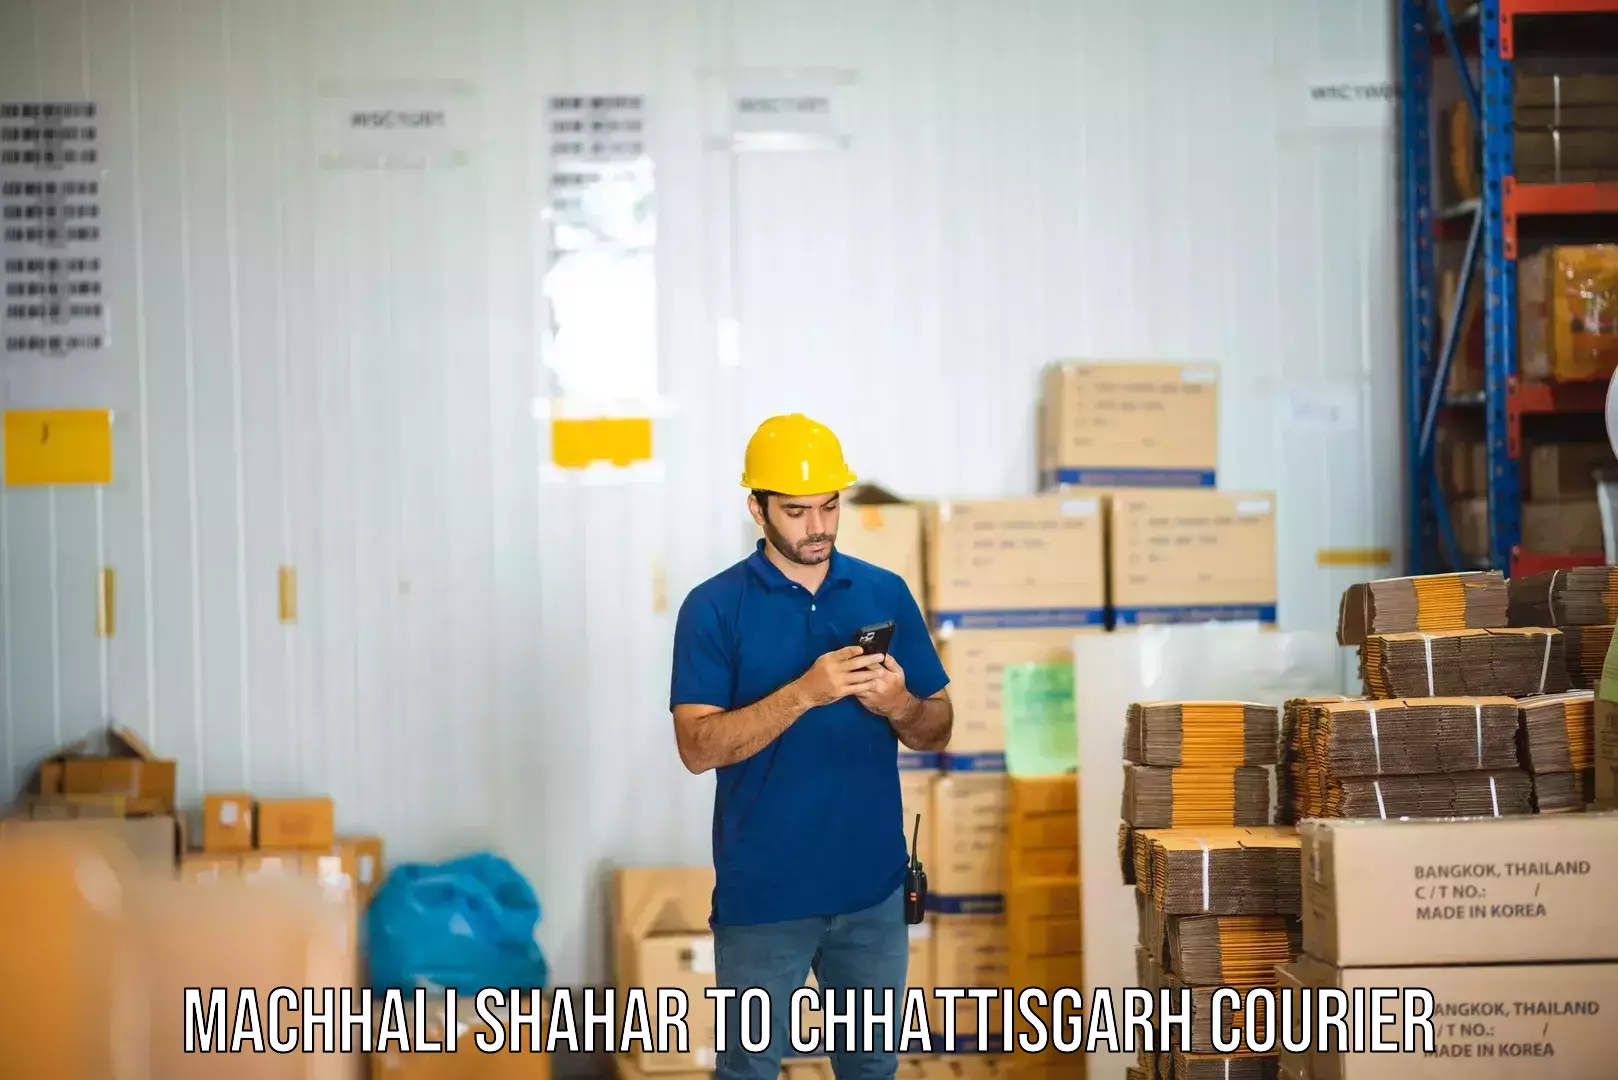 Express delivery capabilities Machhali Shahar to Berla